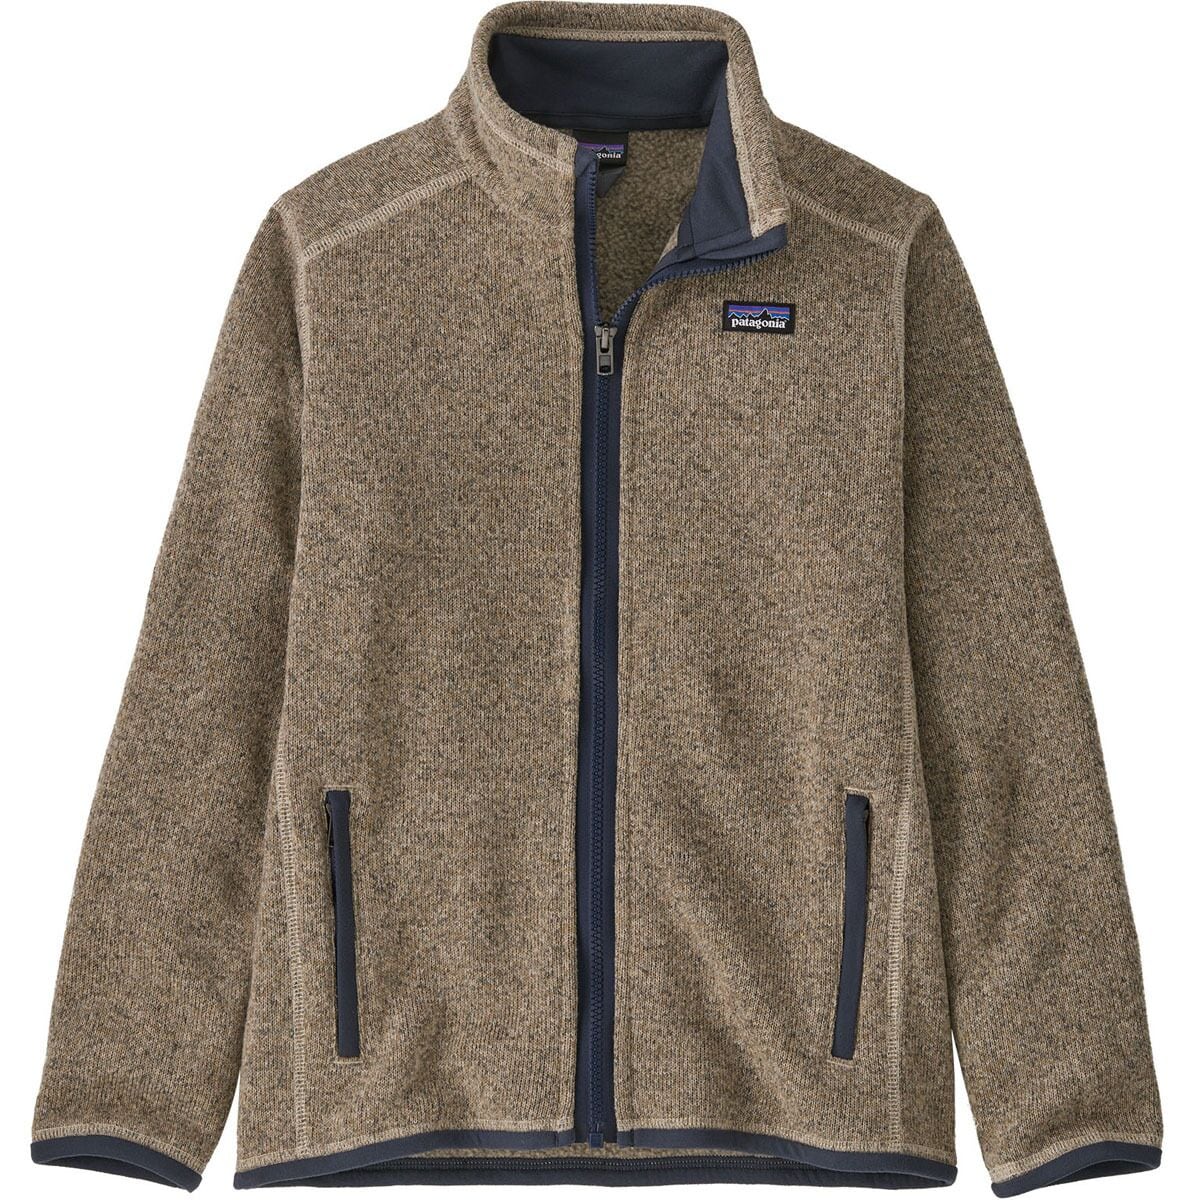 Patagonia Better Sweater Fleece Jacket - Boys